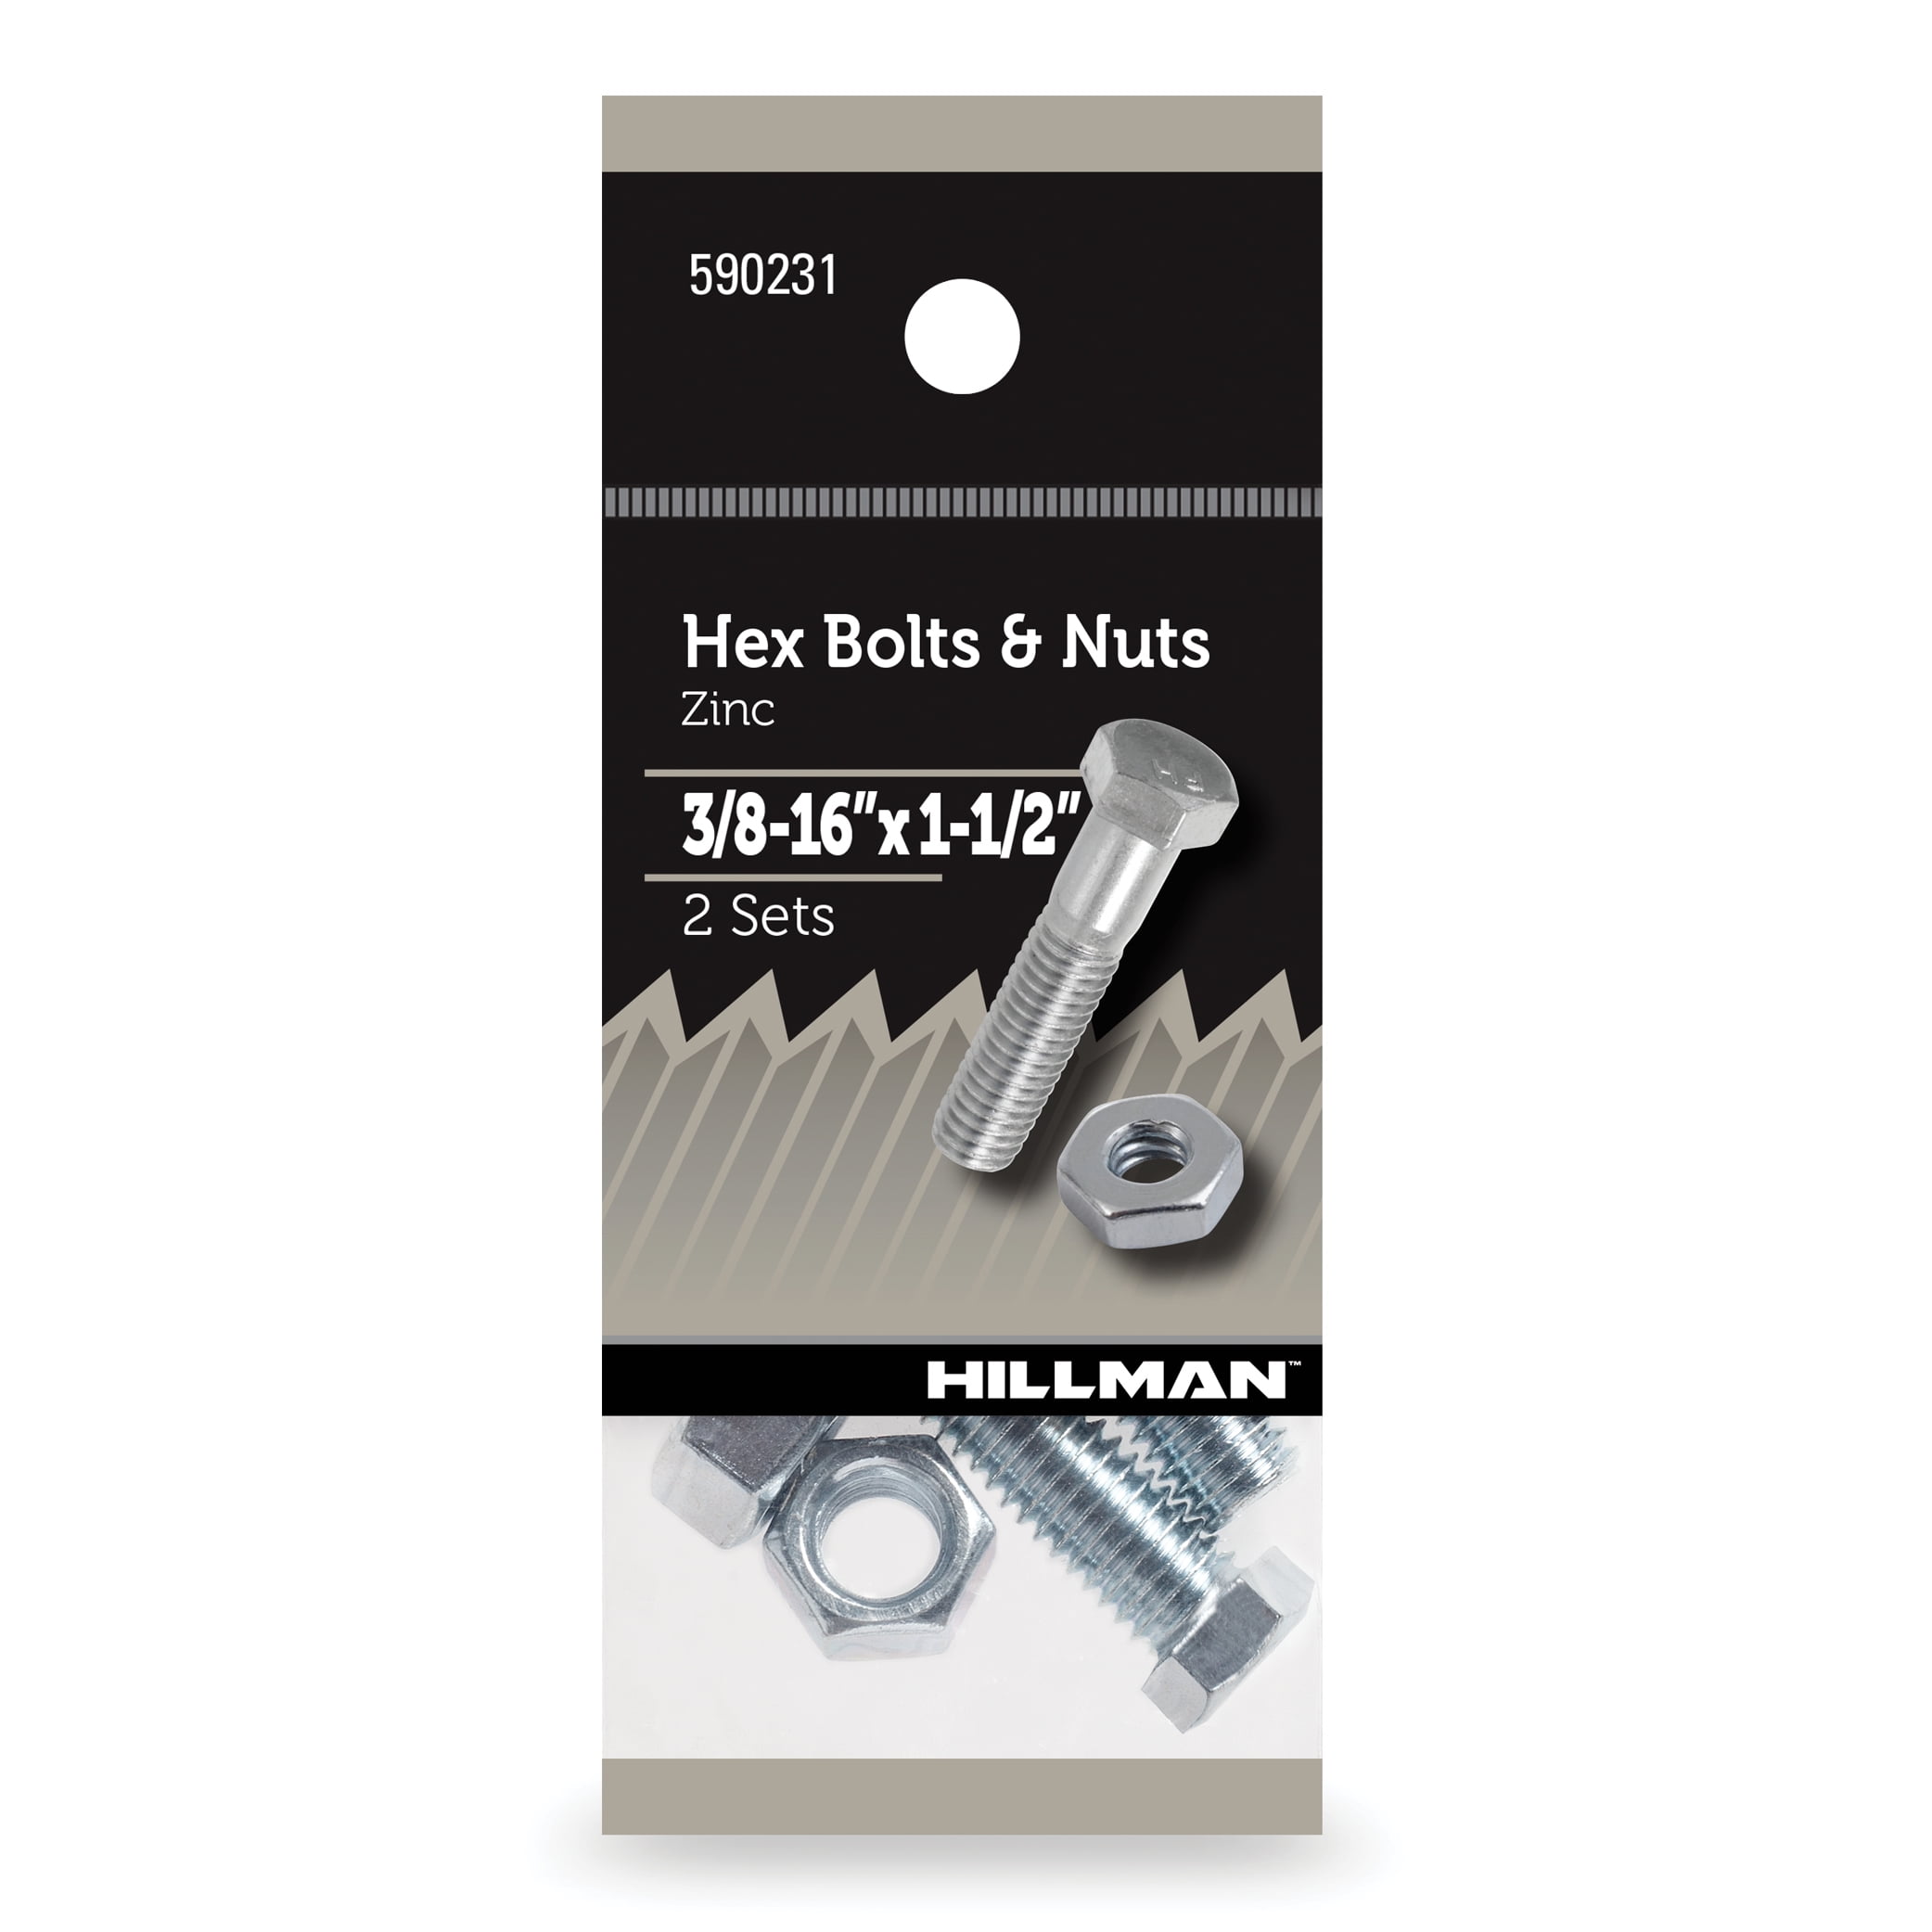 Hillman Hex Bolts and Nuts, Grade 2 Steel, Zinc, 3/8-16" x 1.5", 2 Sets